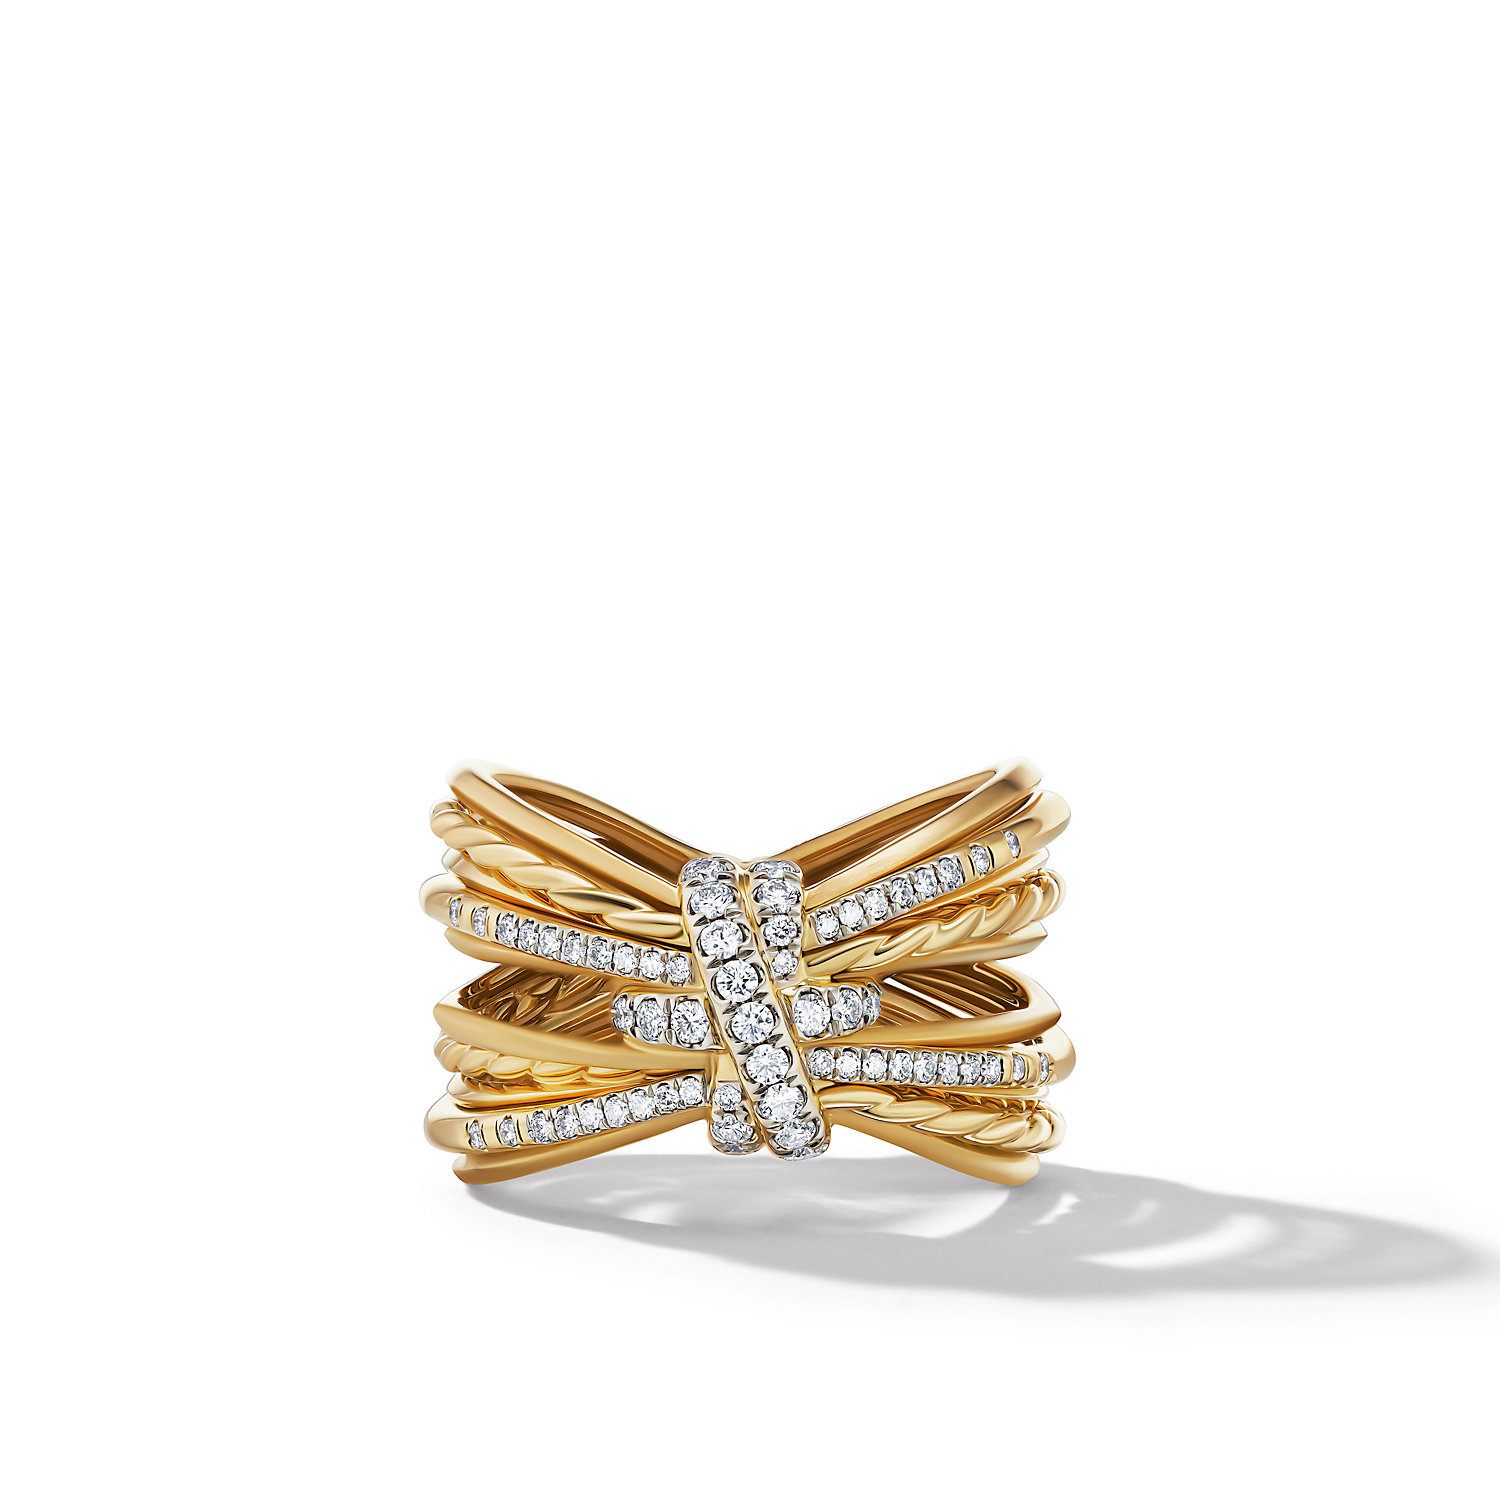 David Yurman Angelika Maltese Ring in 18K Yellow Gold with Pave Diamonds 2